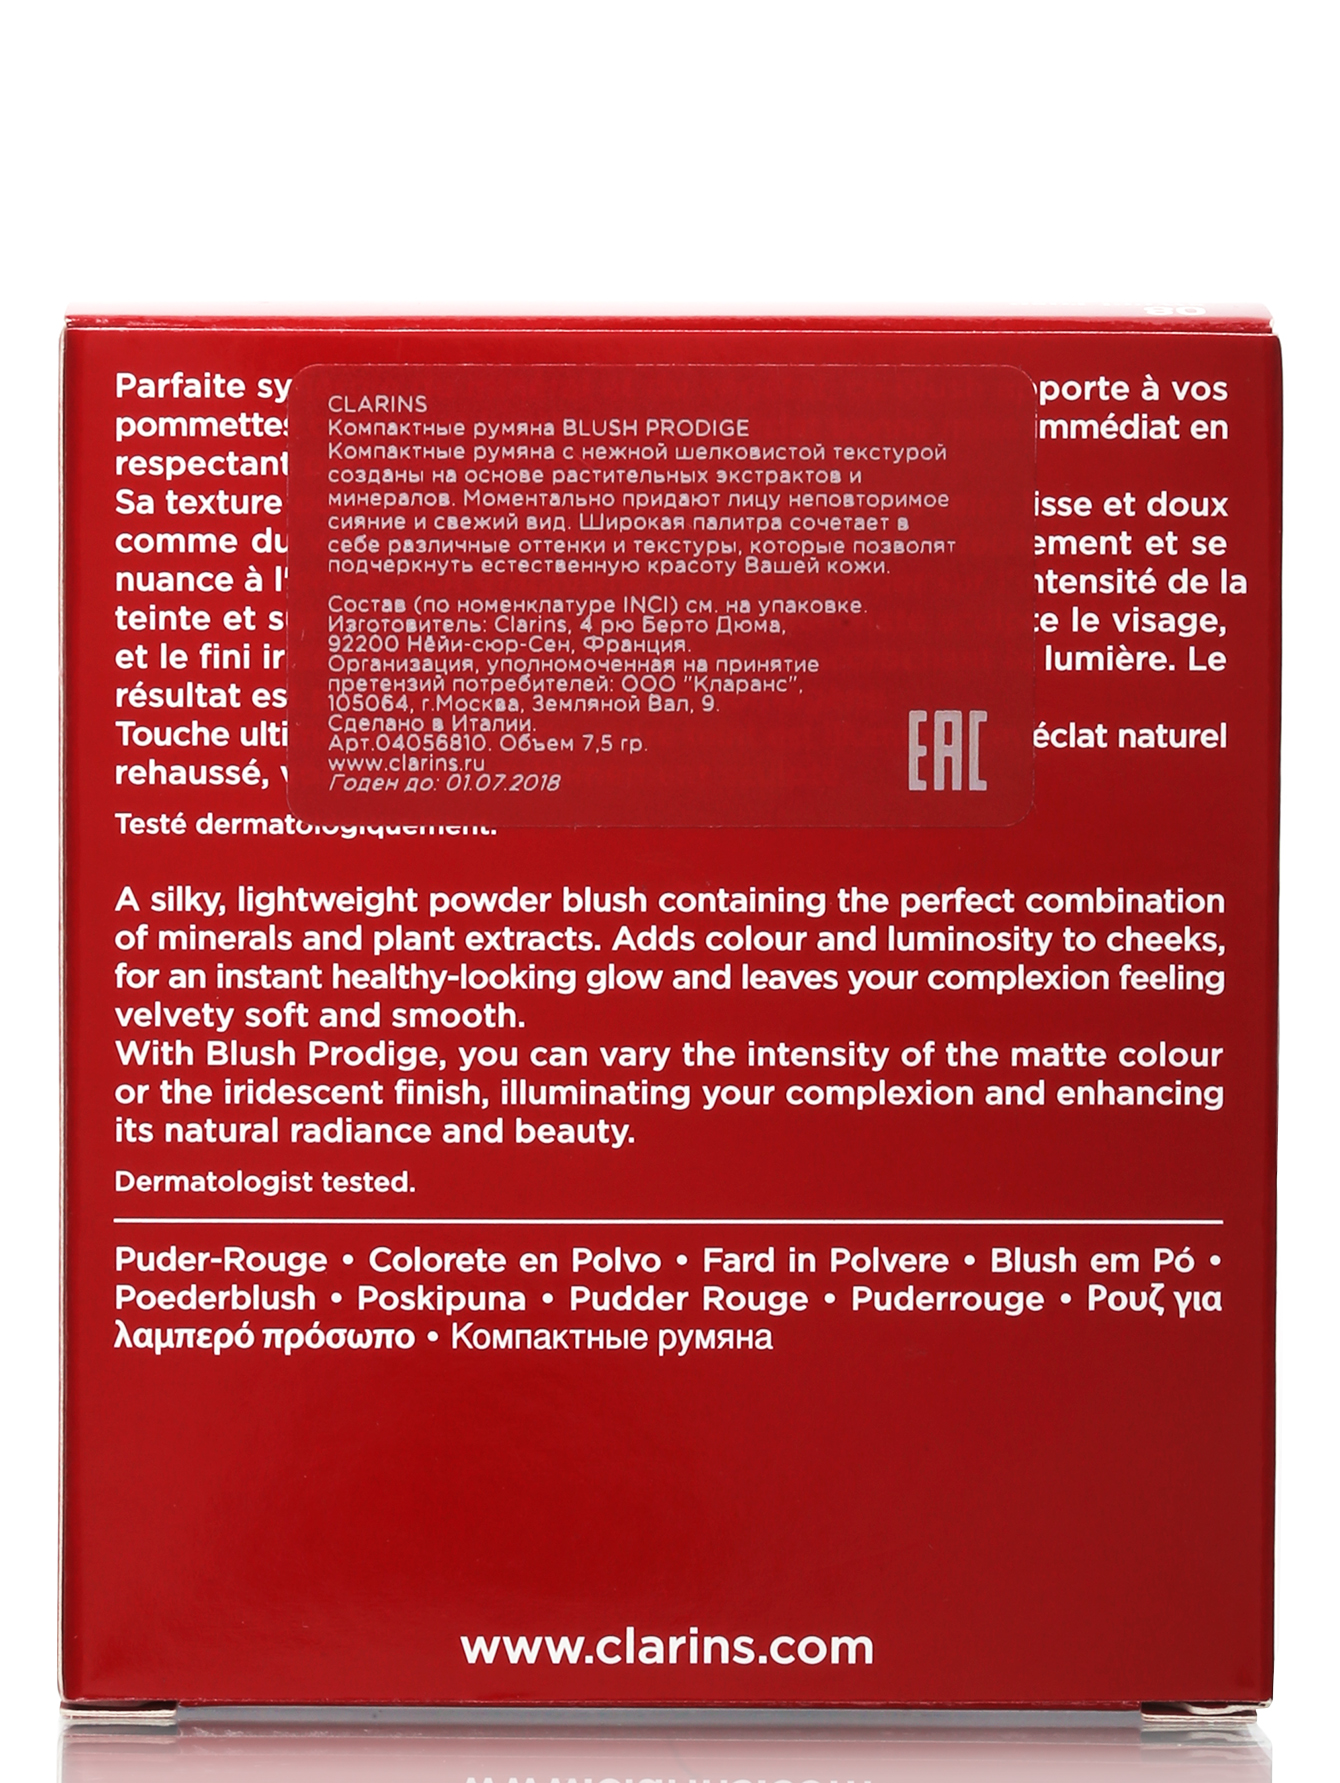  Компактные румяна Blush Prodige - №02 Soft peach, Blush Prodige - Модель Верх-Низ